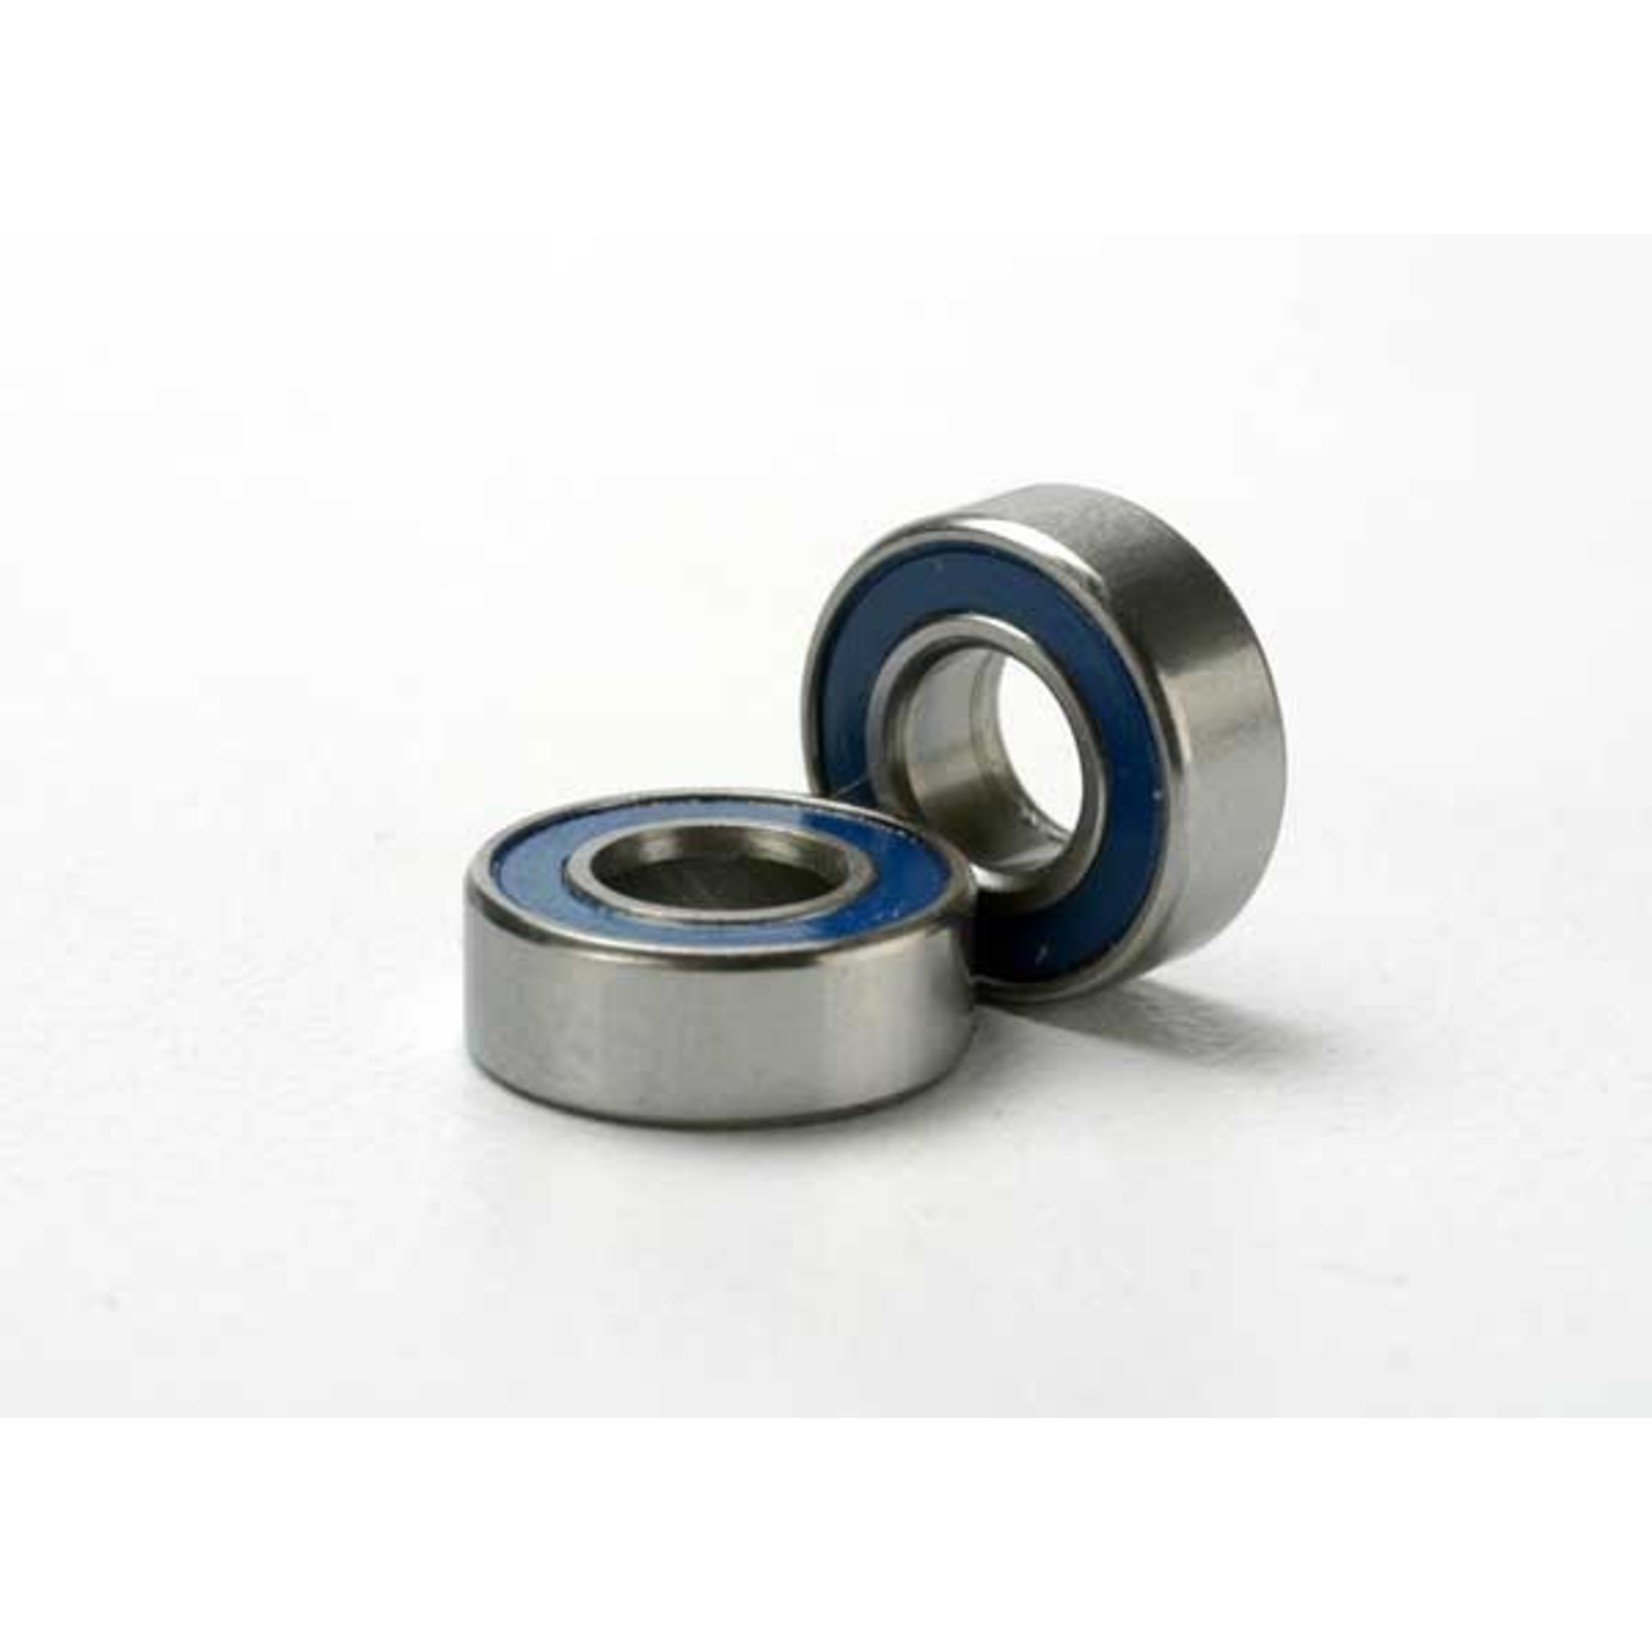 Traxxas 5116 - Ball bearings, blue rubber sealed (5x11x4mm) (2)